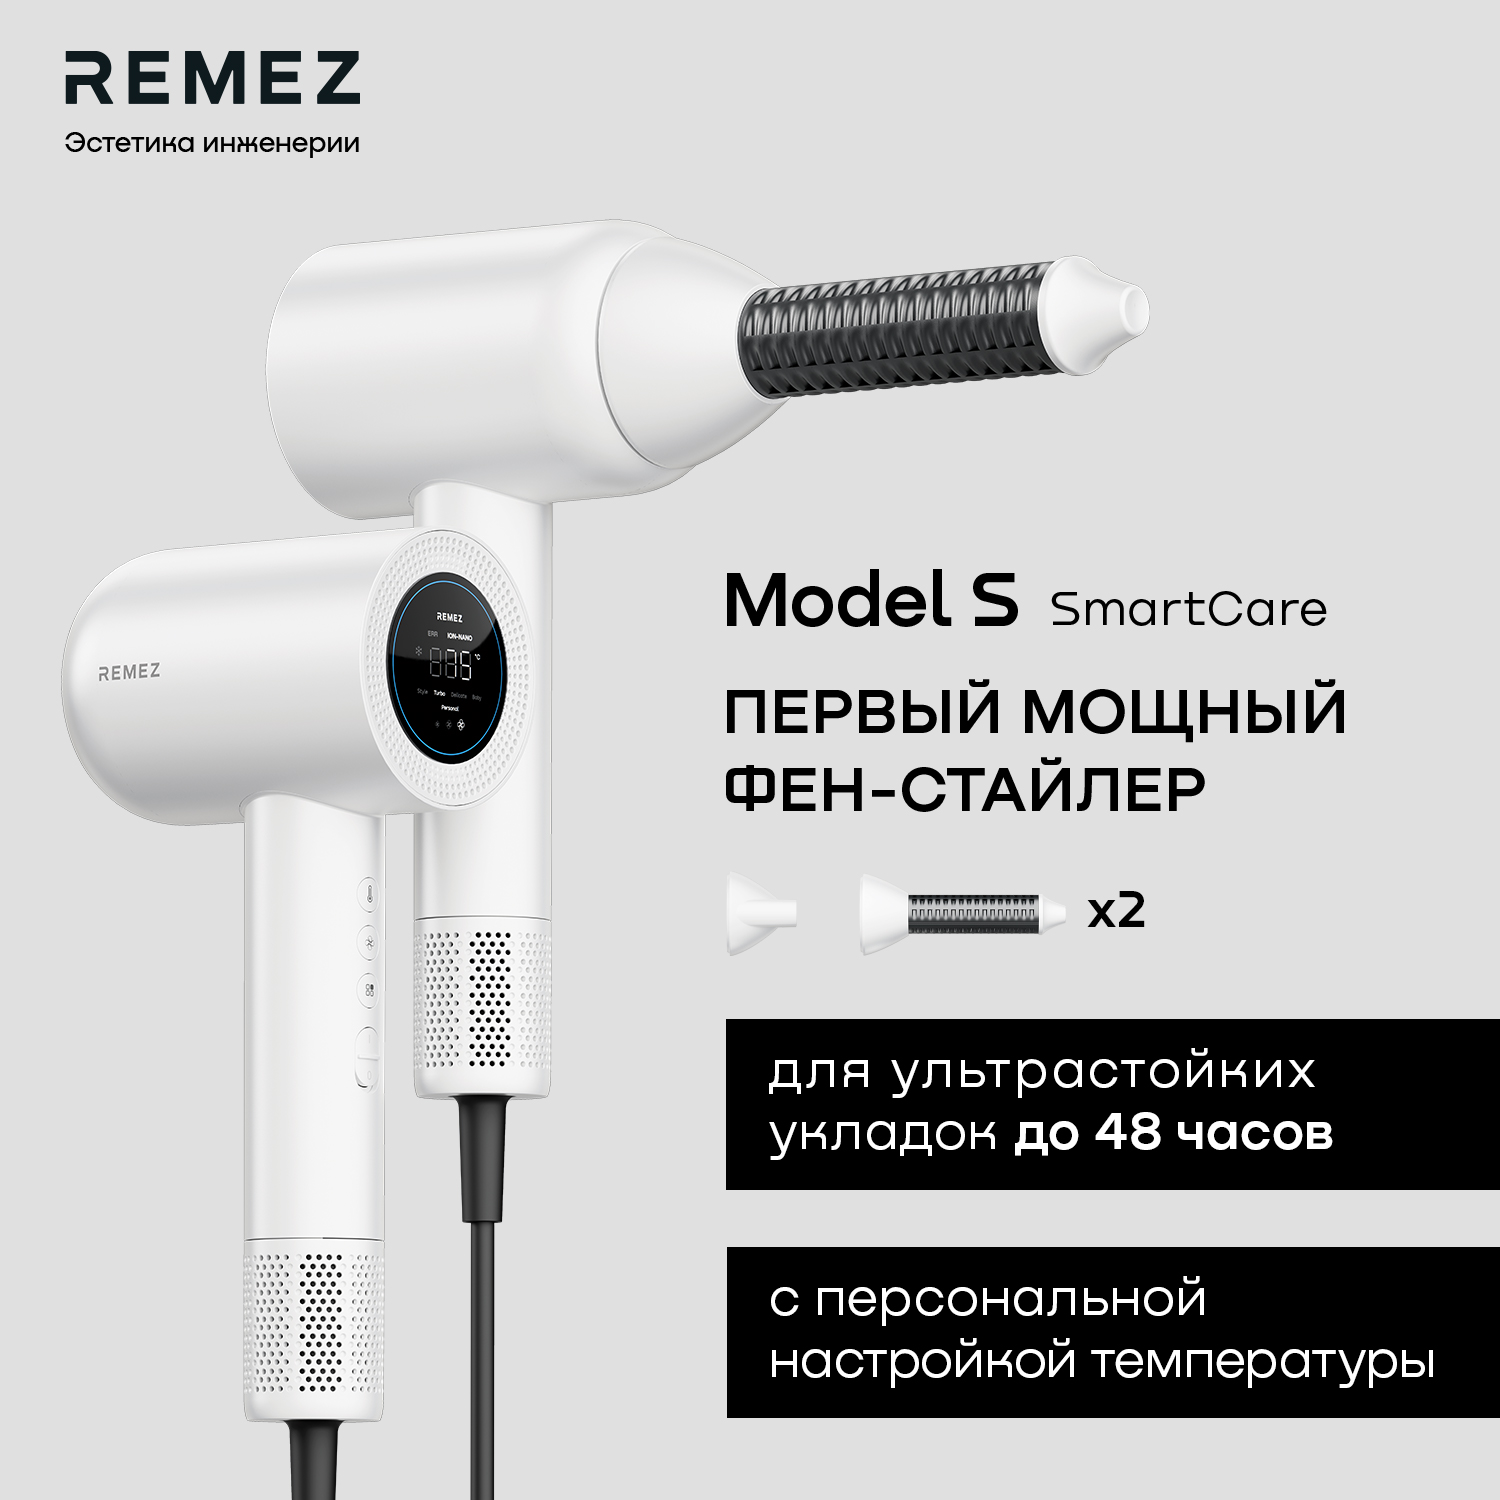 Фен Remez RMB-708 1600 Вт белый фен remez model s 1600 вт белый